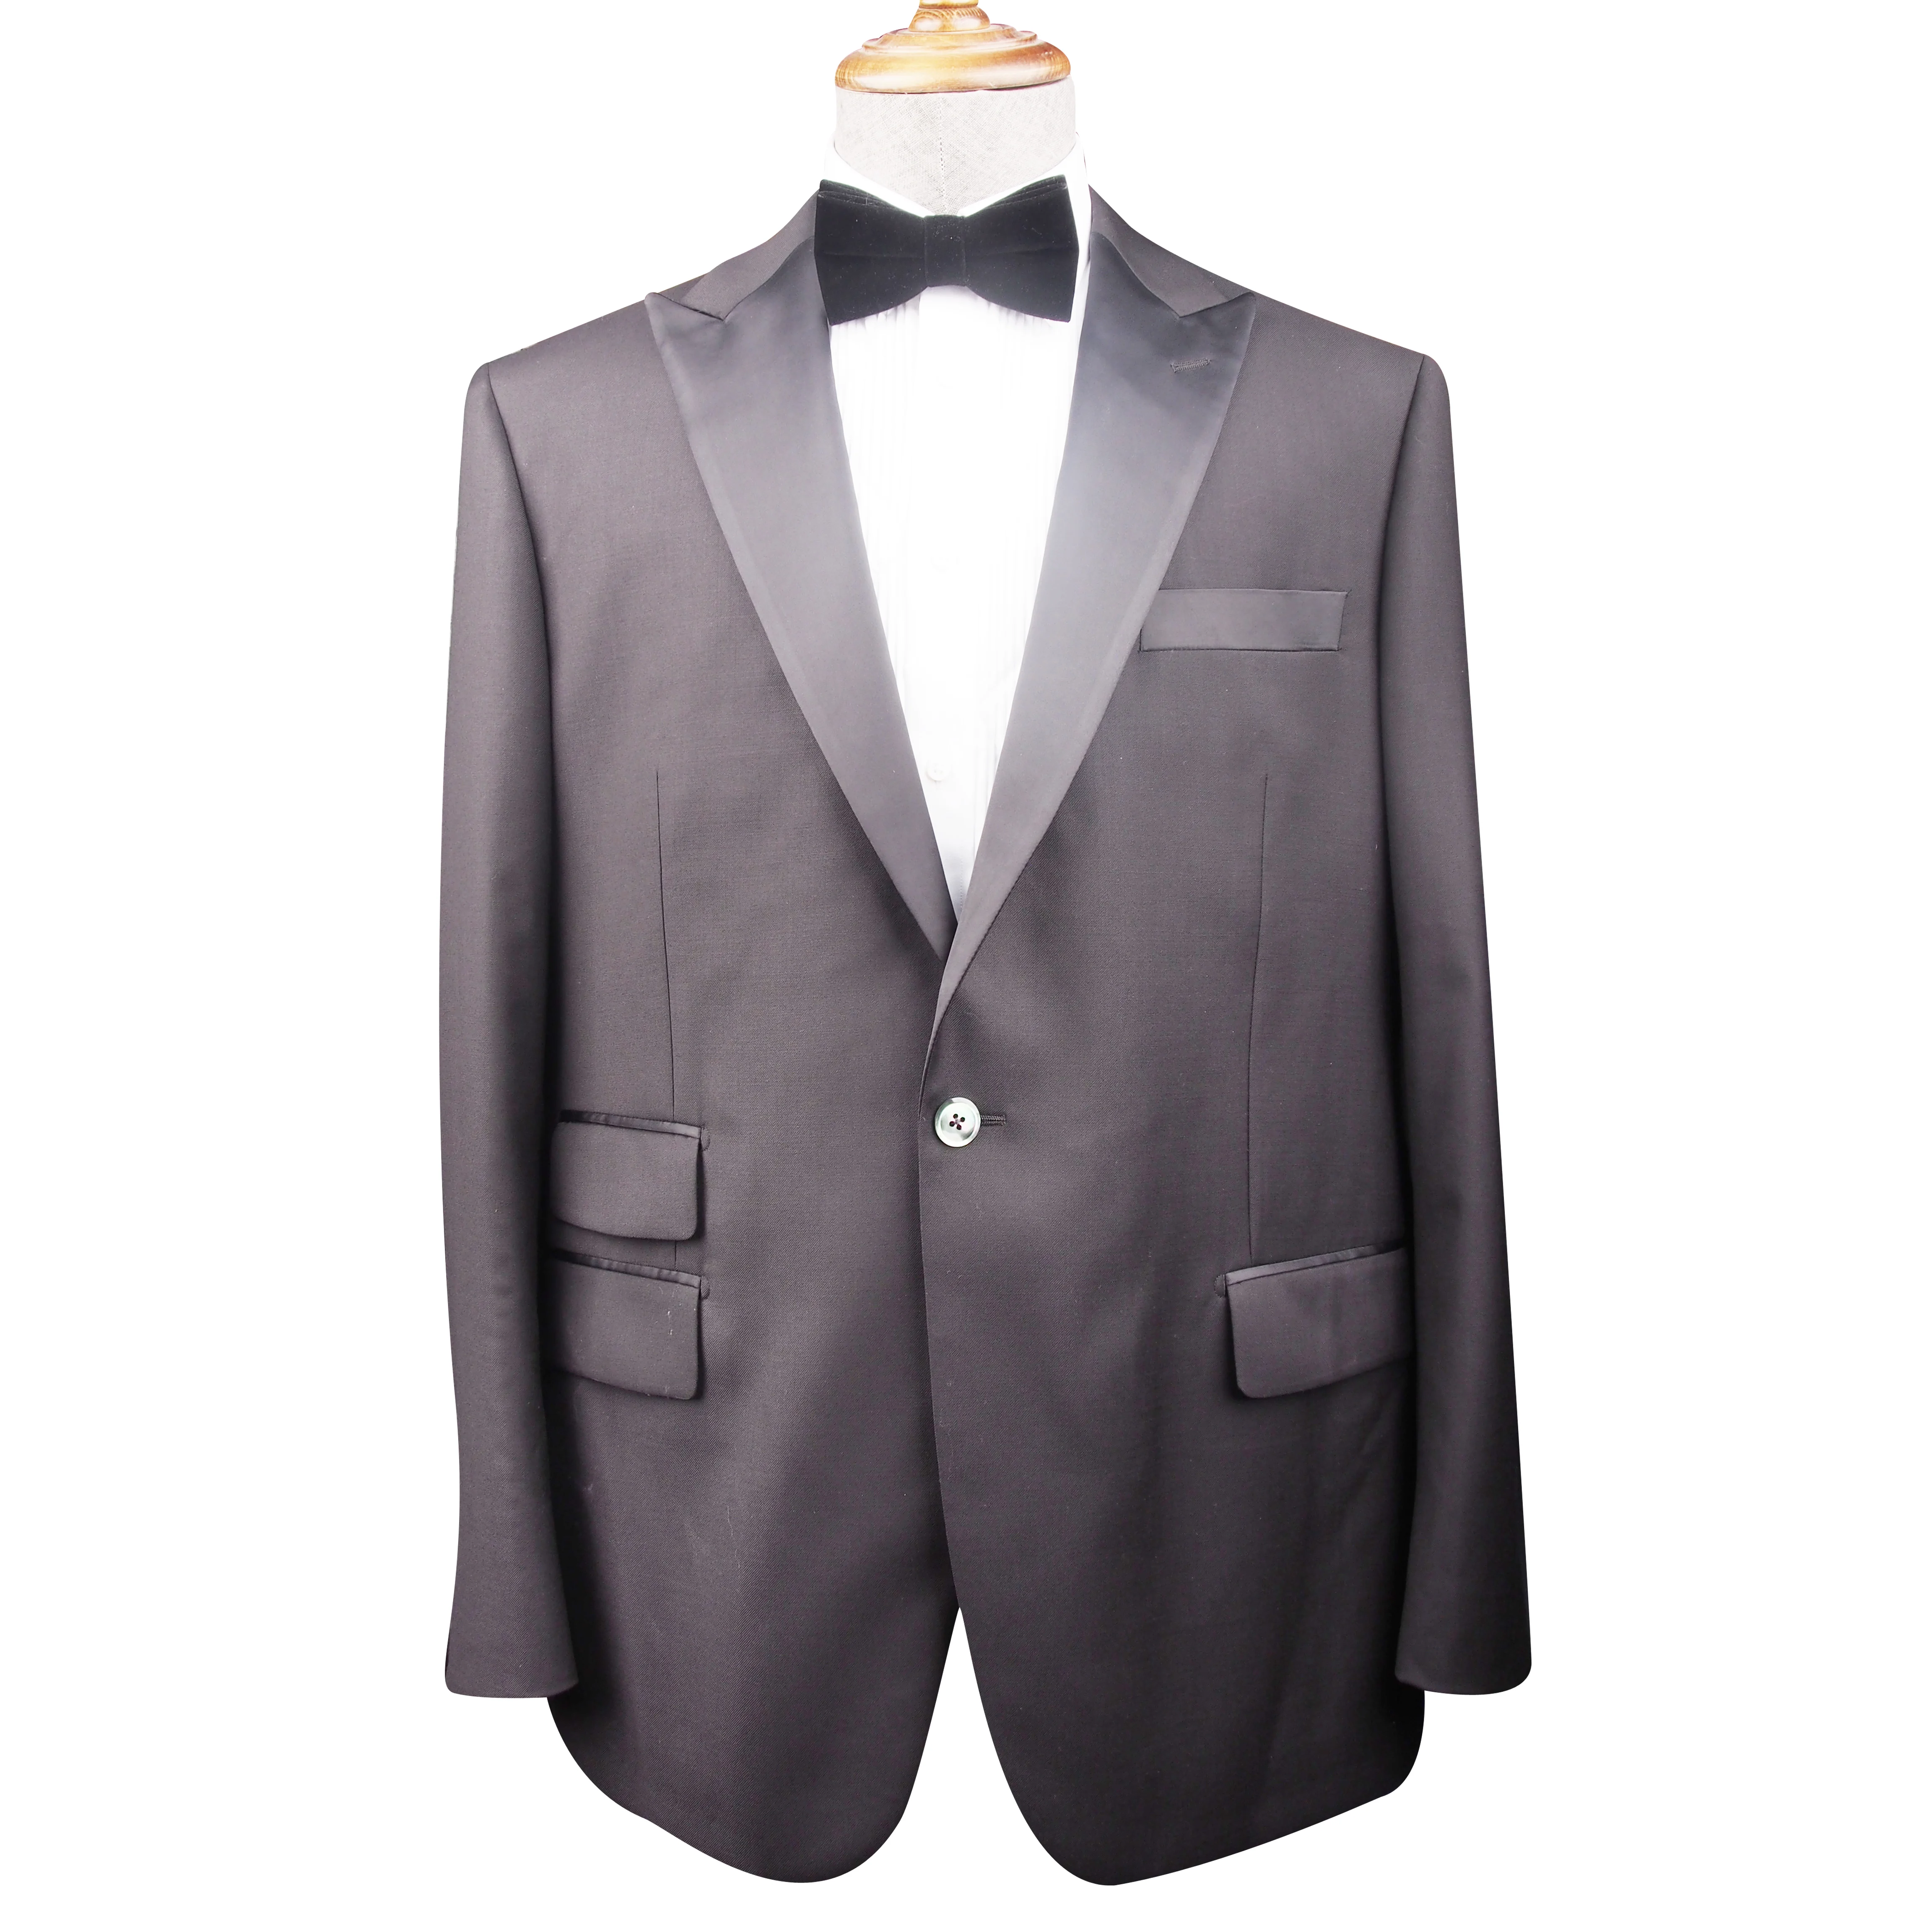 made in China wholesale 2 piezas 100% Wool  Tuxedo Suit modern men’s suit